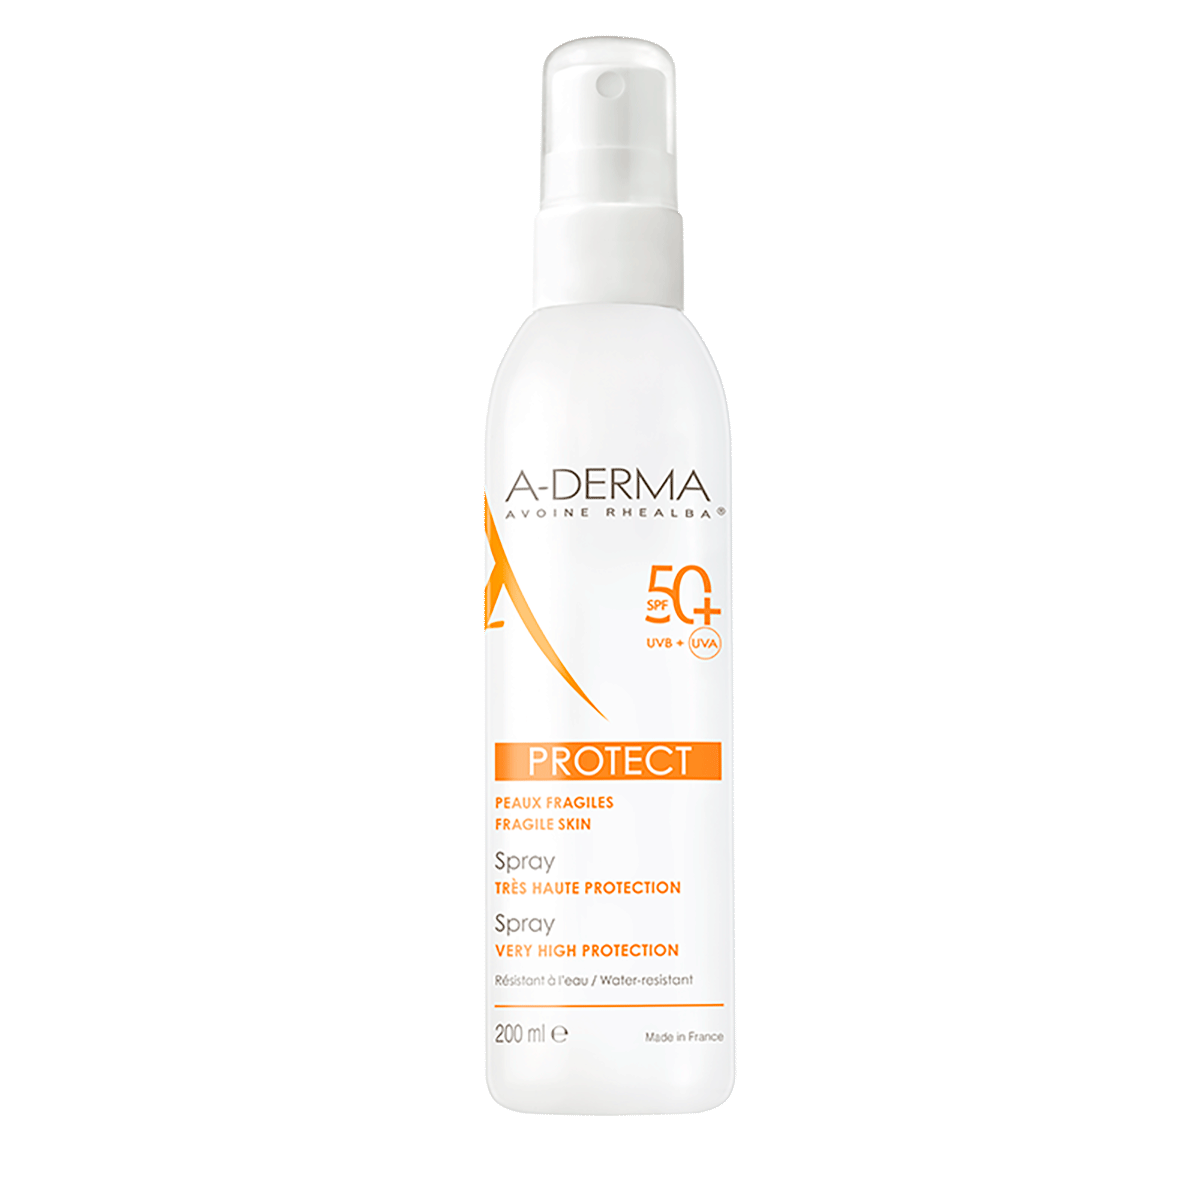 Aderma protect 50+ Spray 200ml.